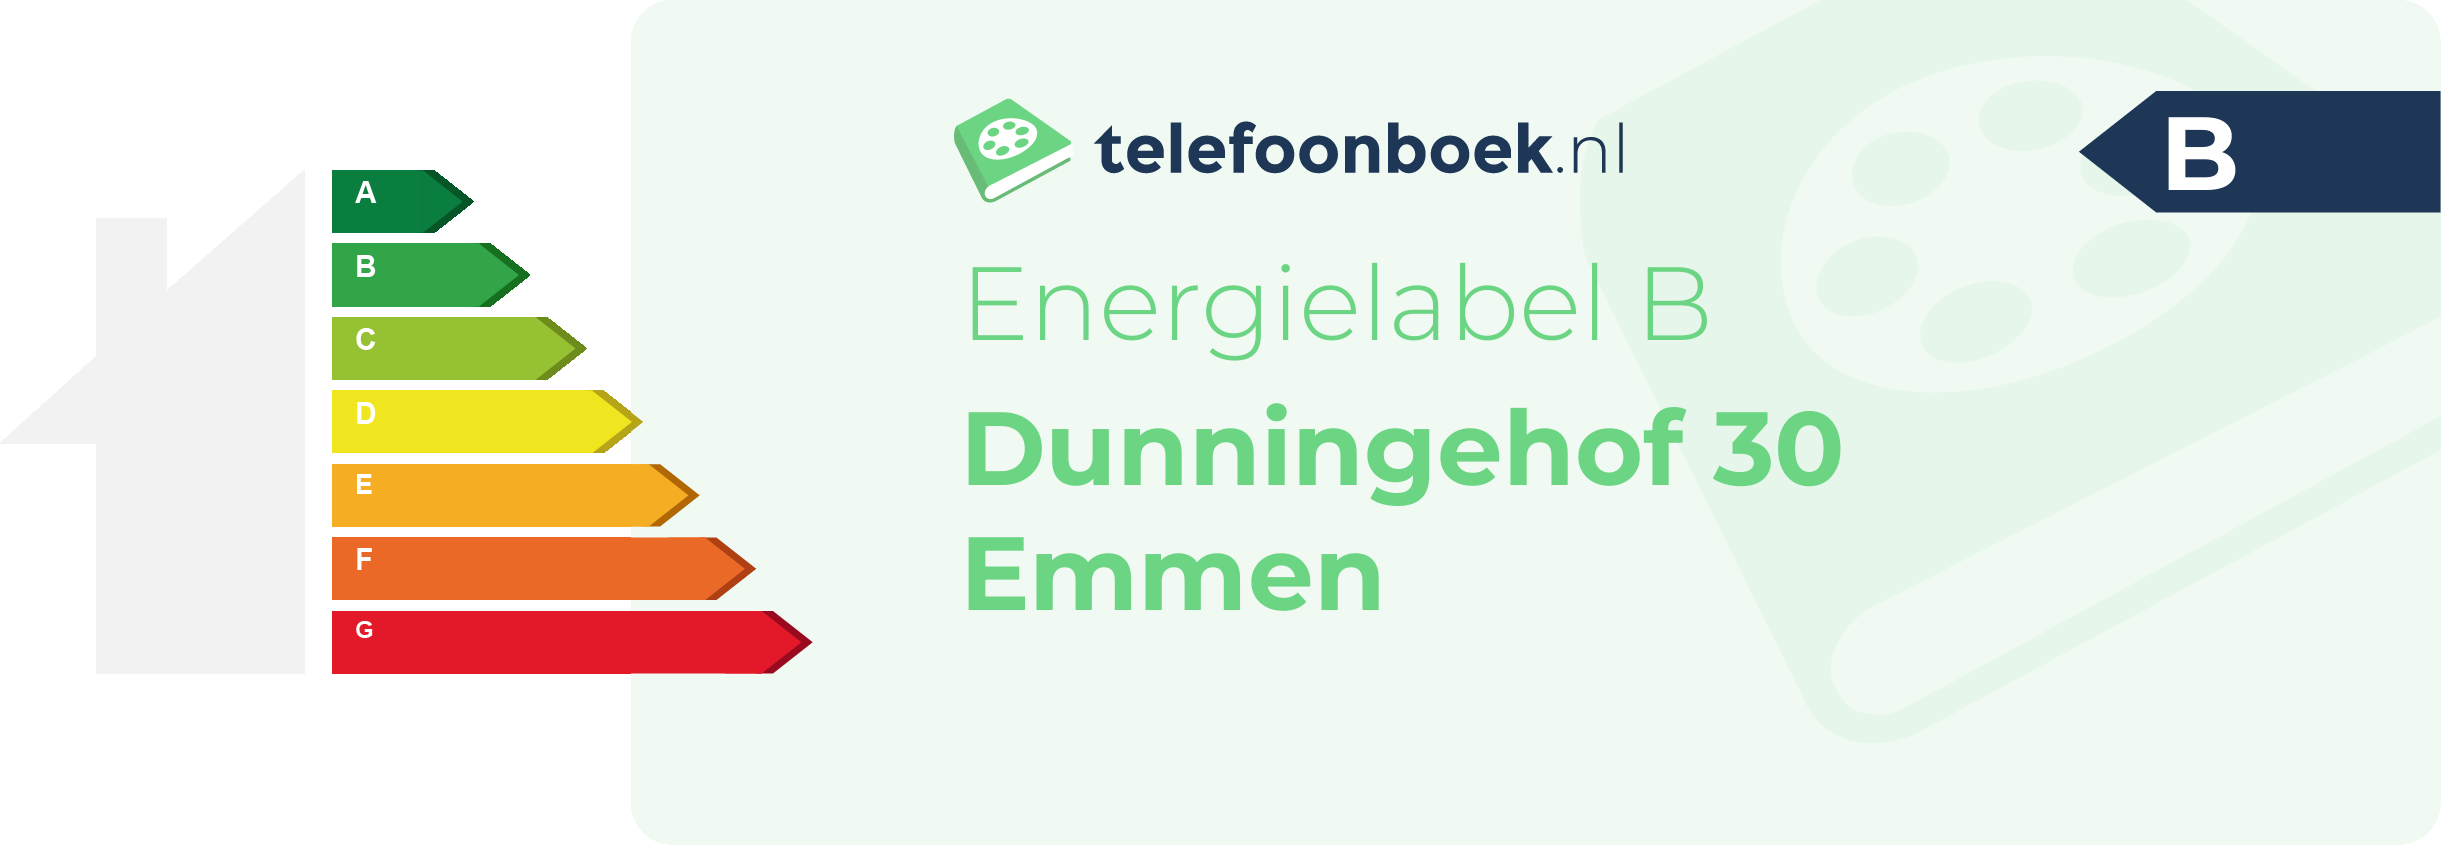 Energielabel Dunningehof 30 Emmen